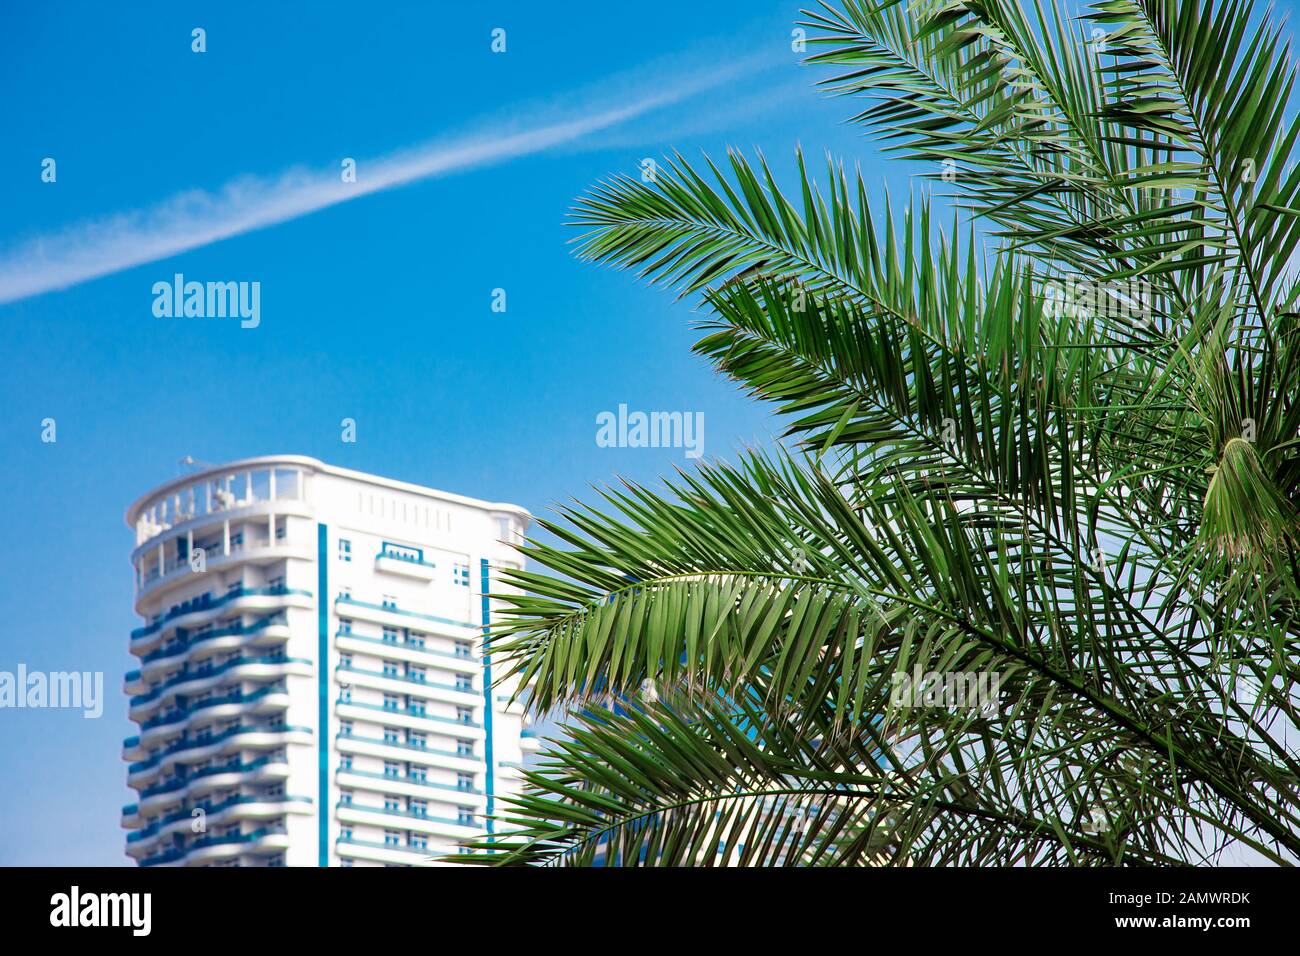 Green Palm Tree with Scyscraper Top on Blue Sky Stock Photo